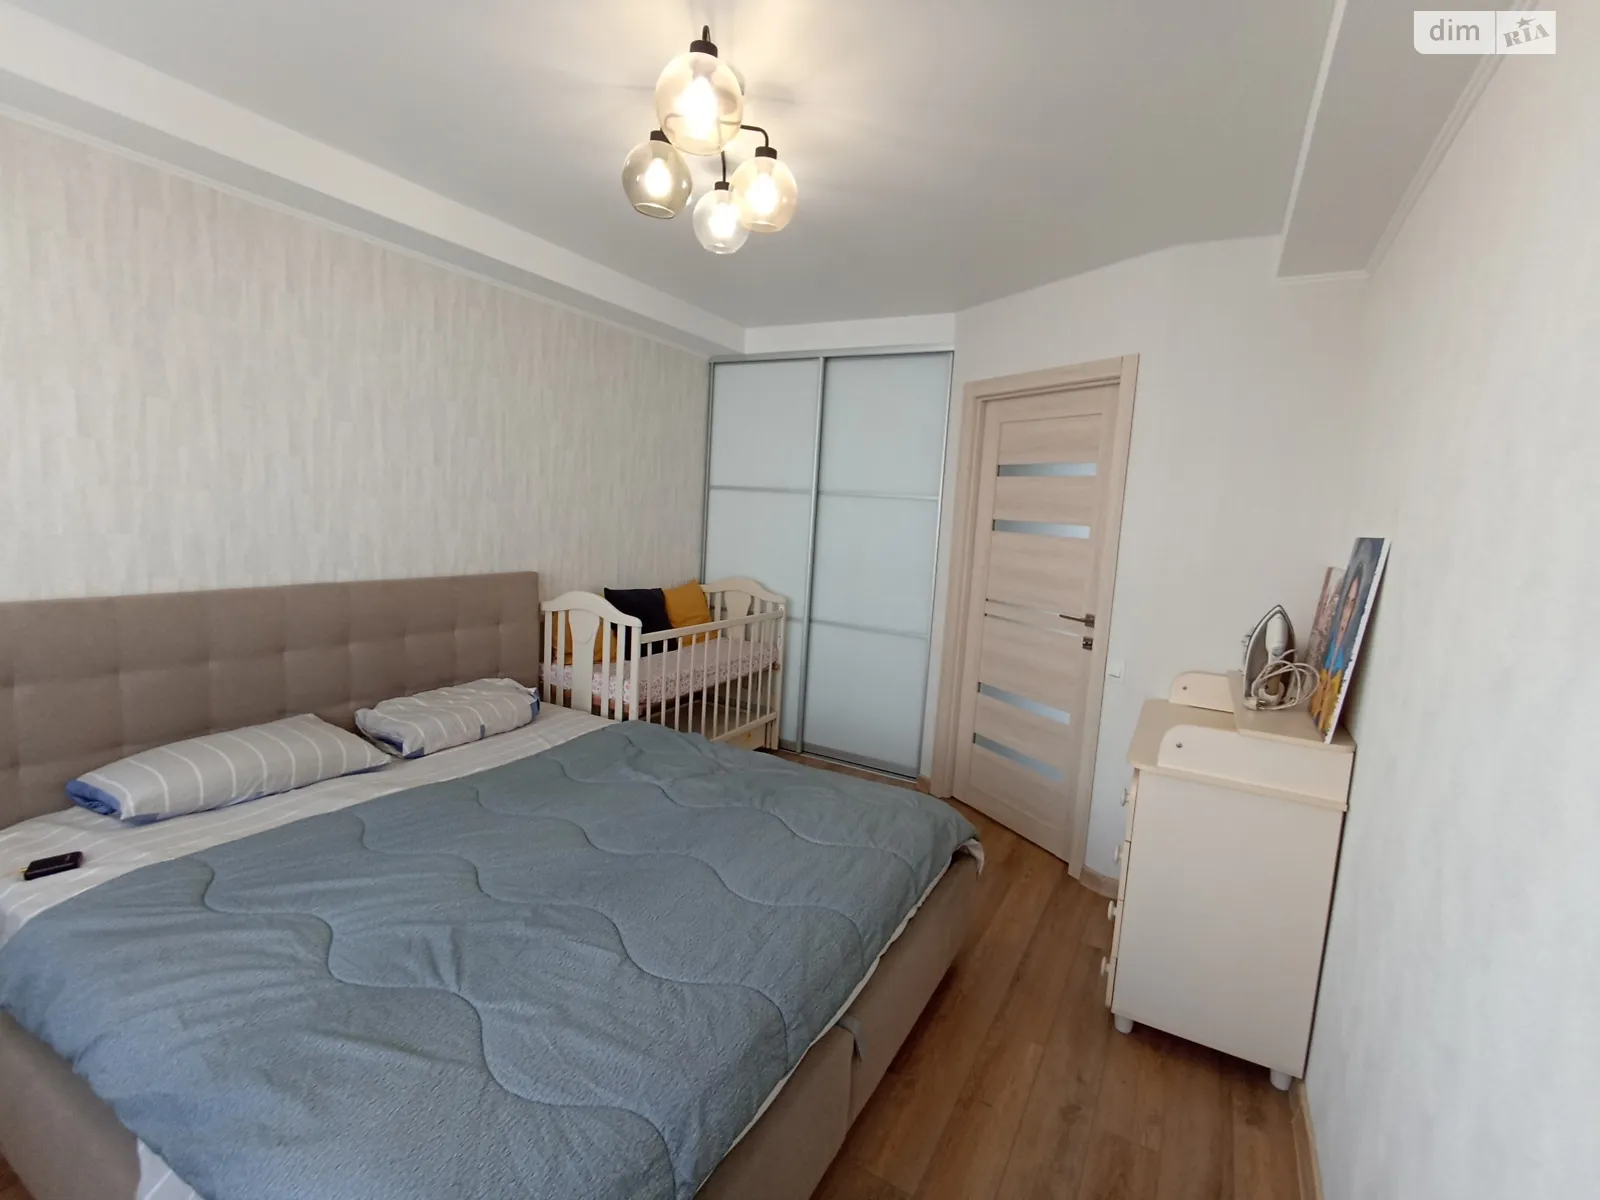 3-комнатная квартира 70 кв. м в Запорожье, ул. Бочарова